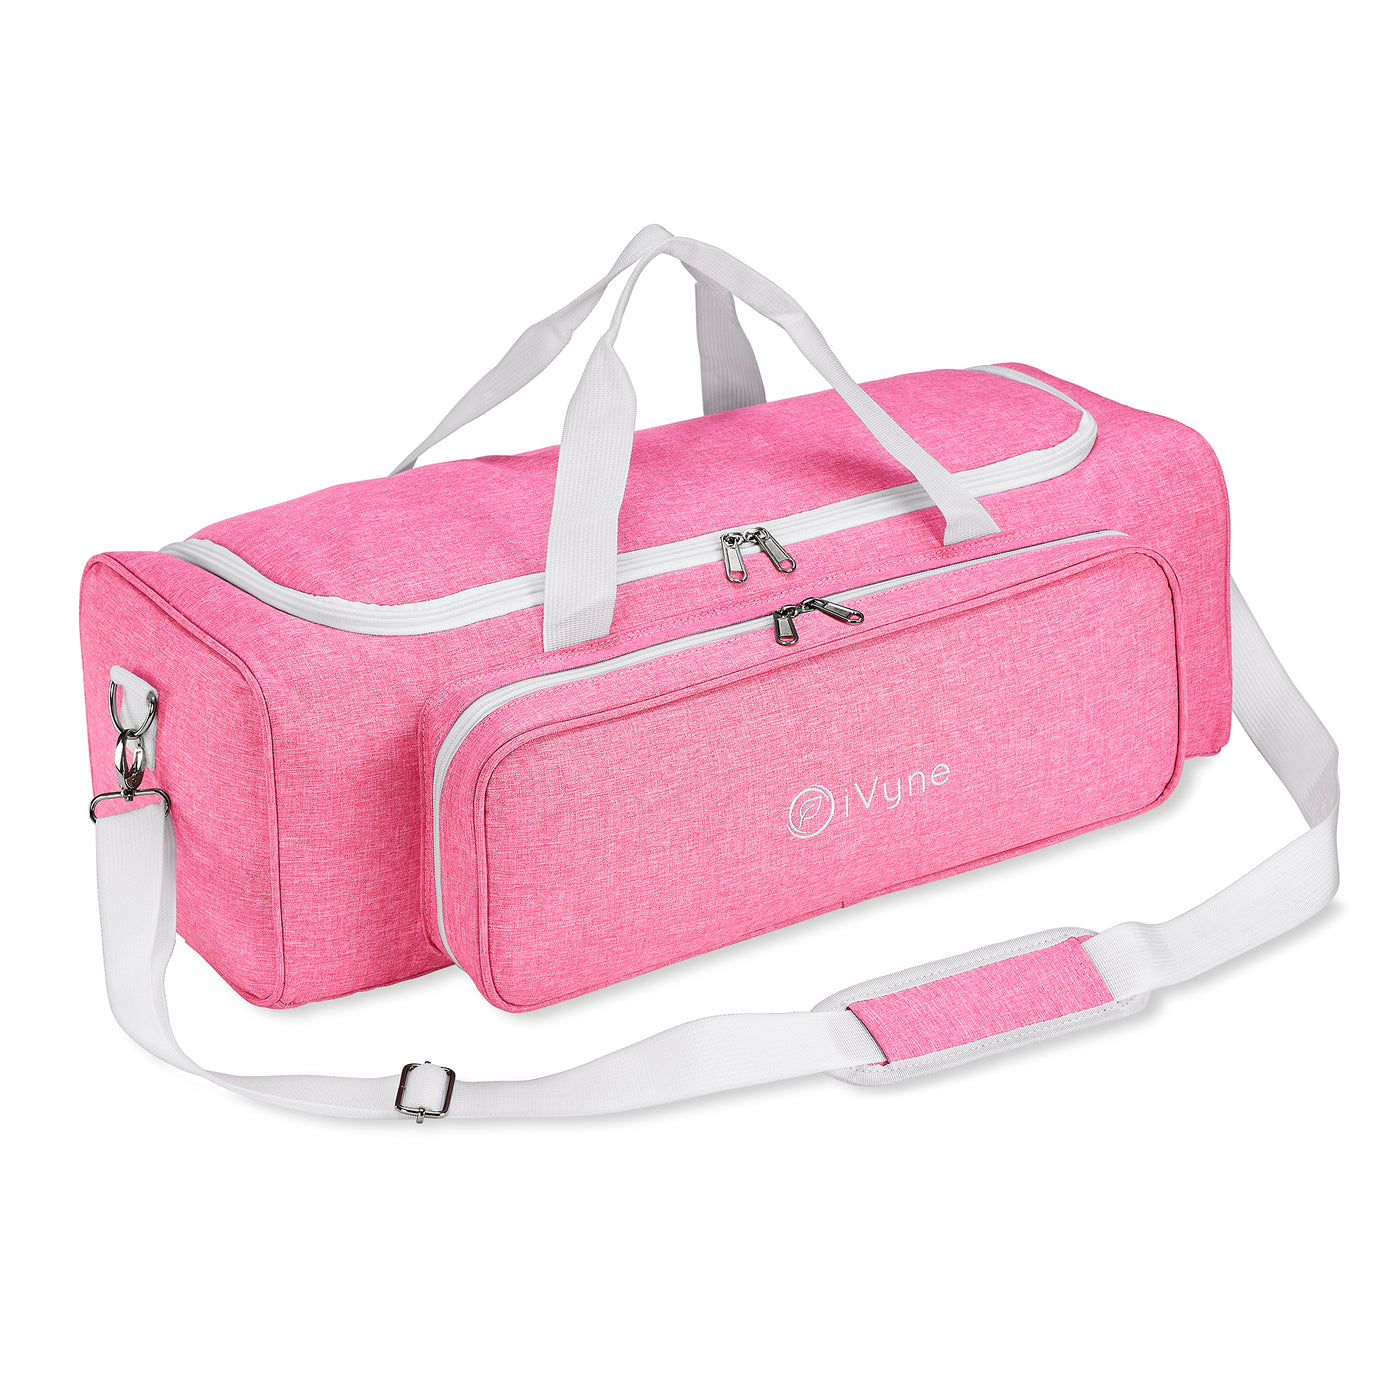  AMOIGEE Carrying Case for Cricut Explore Air 2, Cricut Maker 3,  Cricut Explore 3, Pink Storage Organizer for Cricut accessories, Quilted  Cricut Bag Only